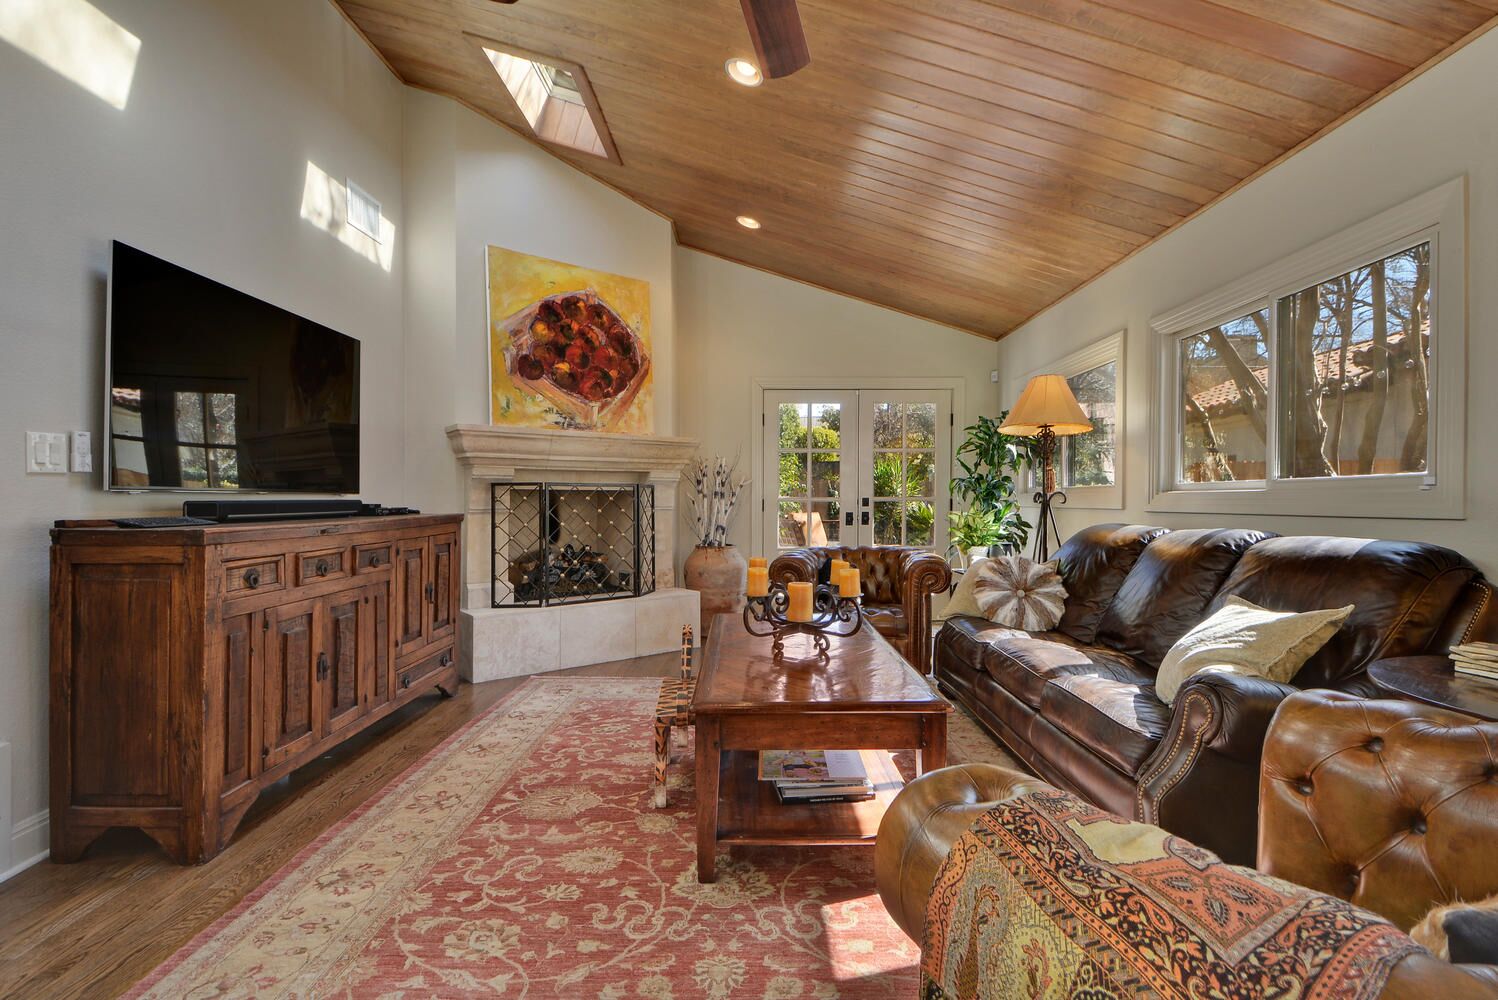 Comfortable living room interior design with multicolor area rug